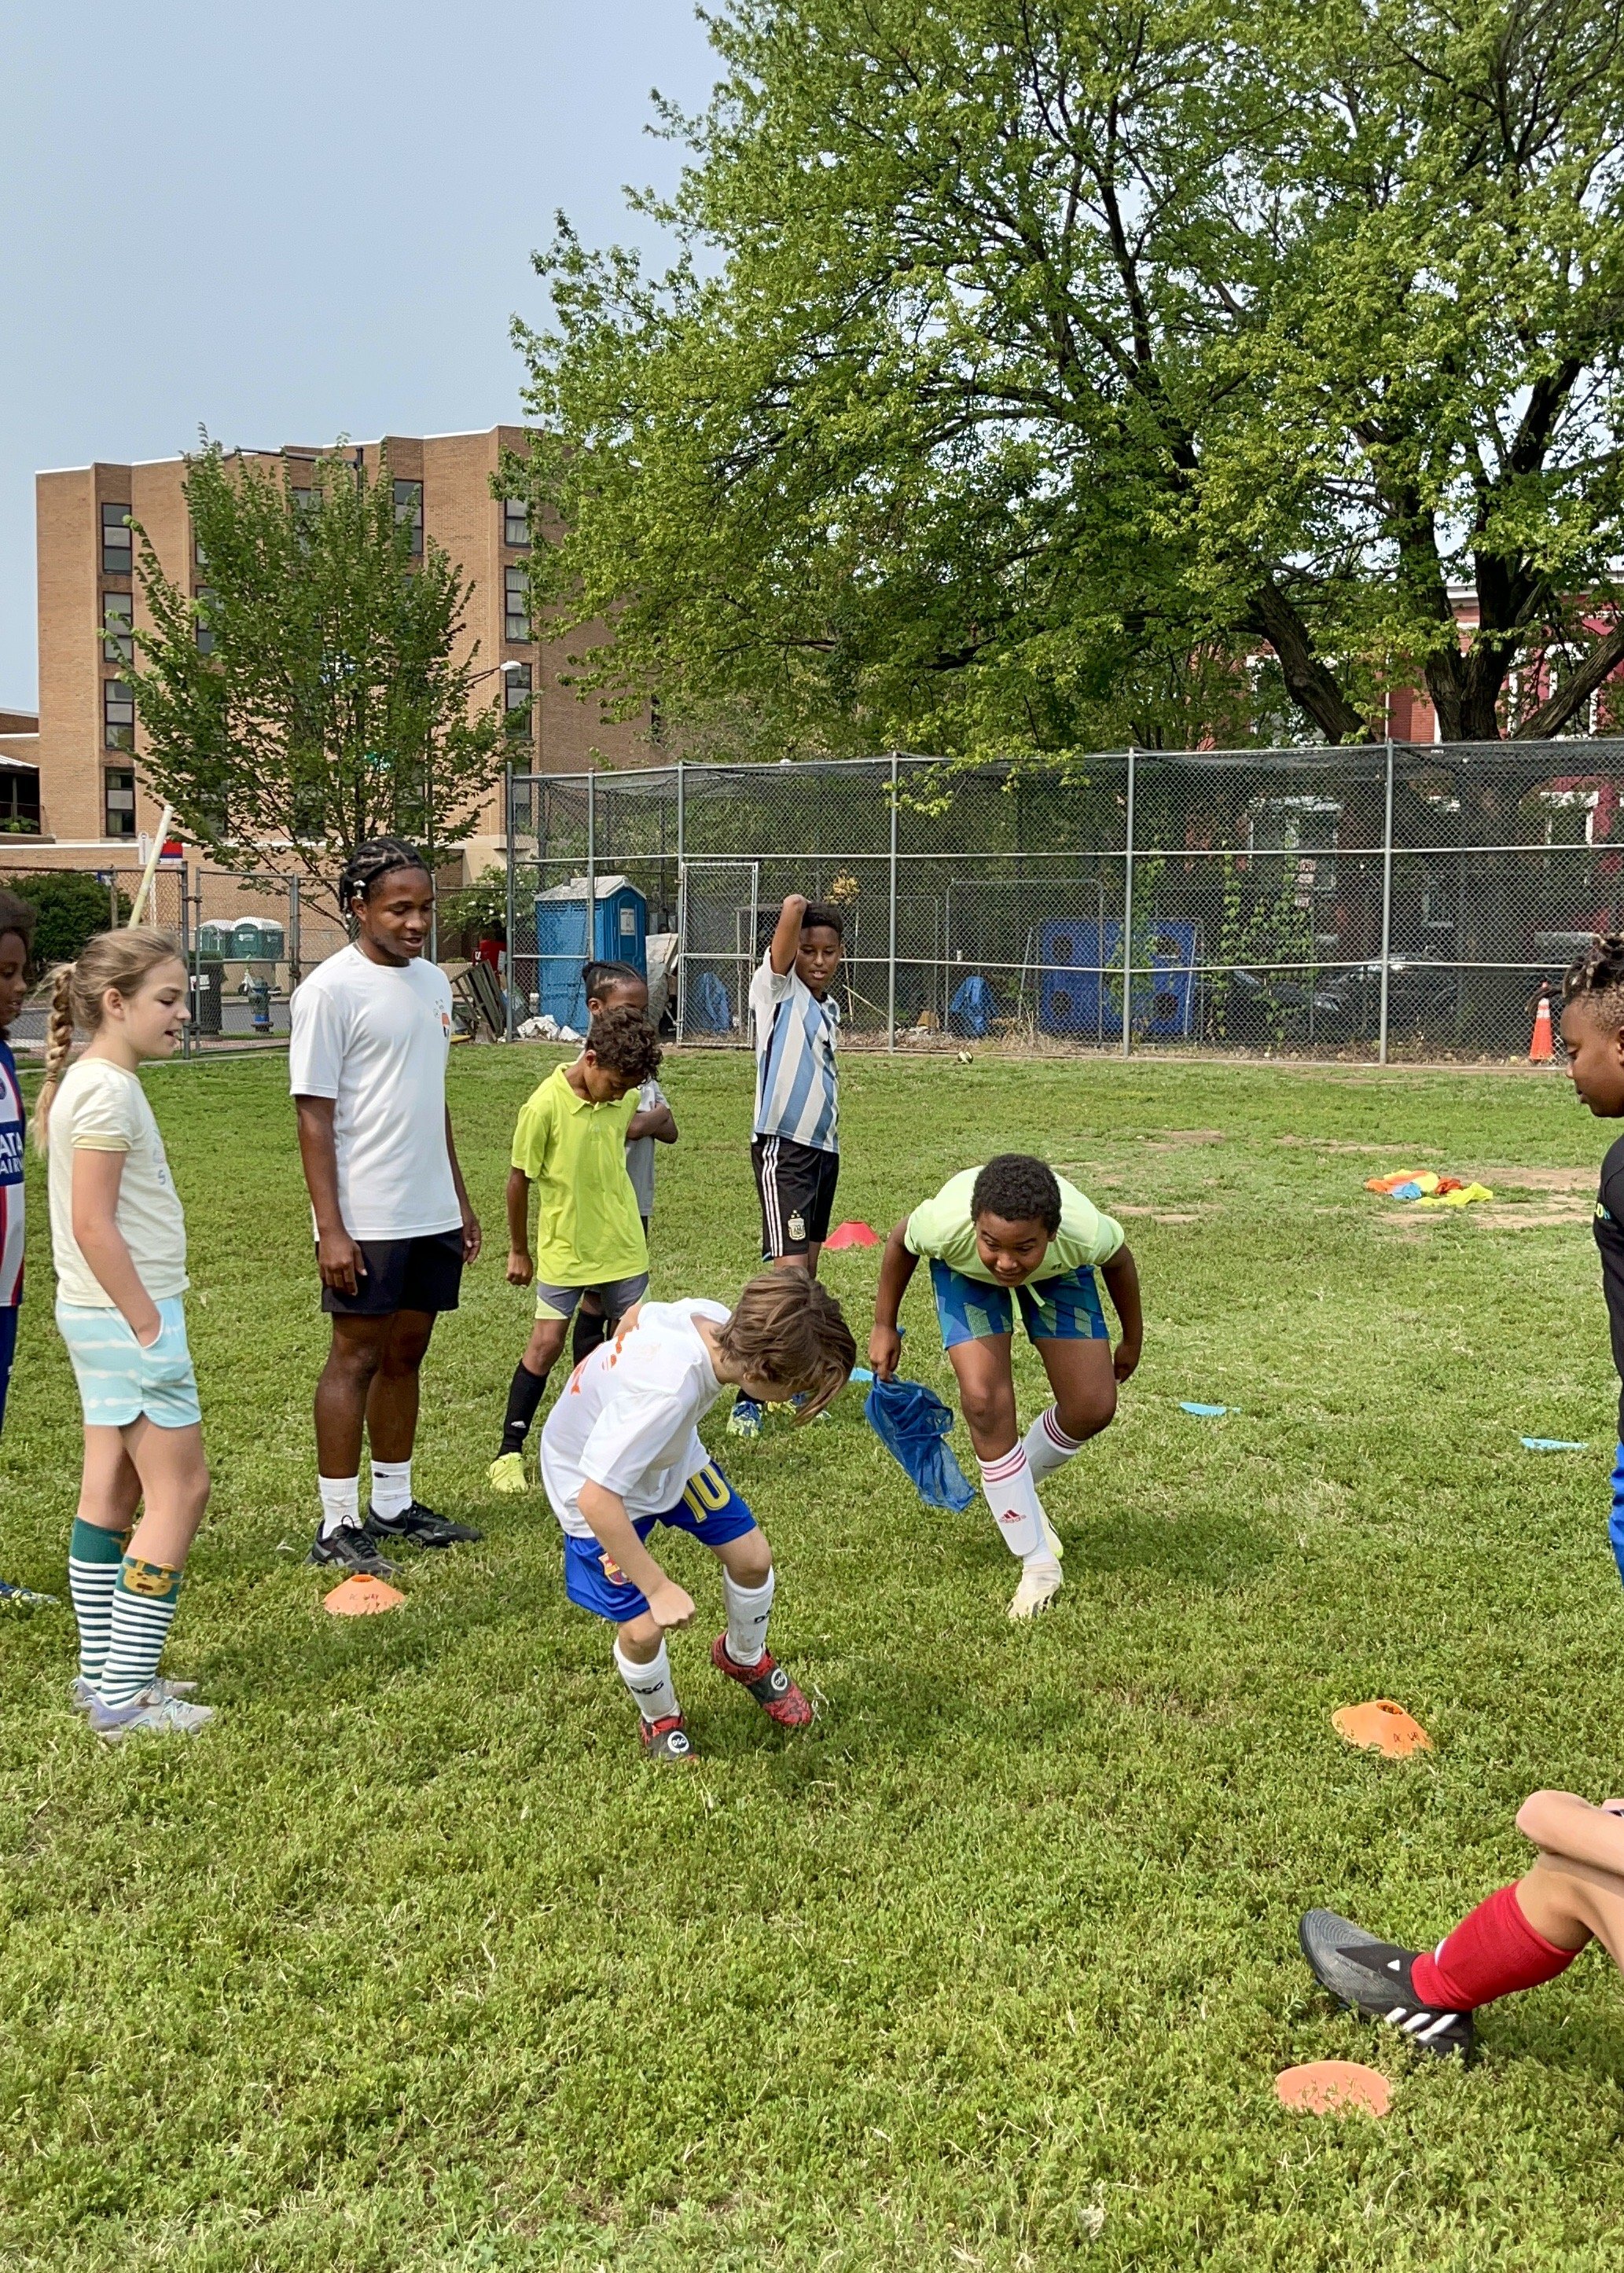 Dc-way-soccer-club-for-kids-in-washington-dc-summer-camp-at-tyler-elementary-school- 9122.JPG